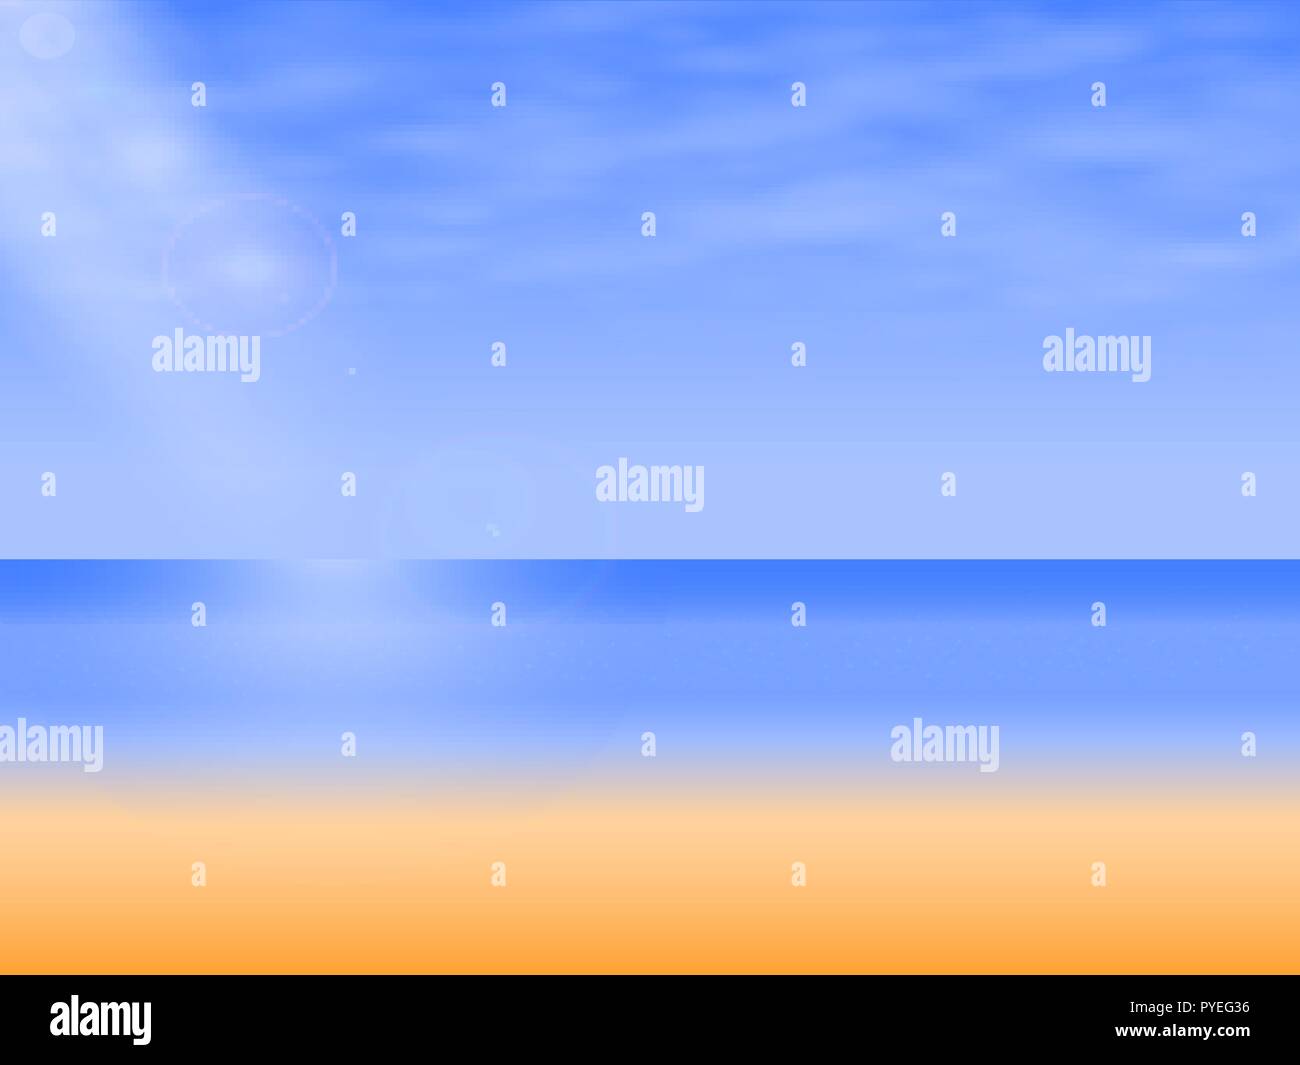 Horizontal Vector Illustration Of An Empty Sky Blue Coloured